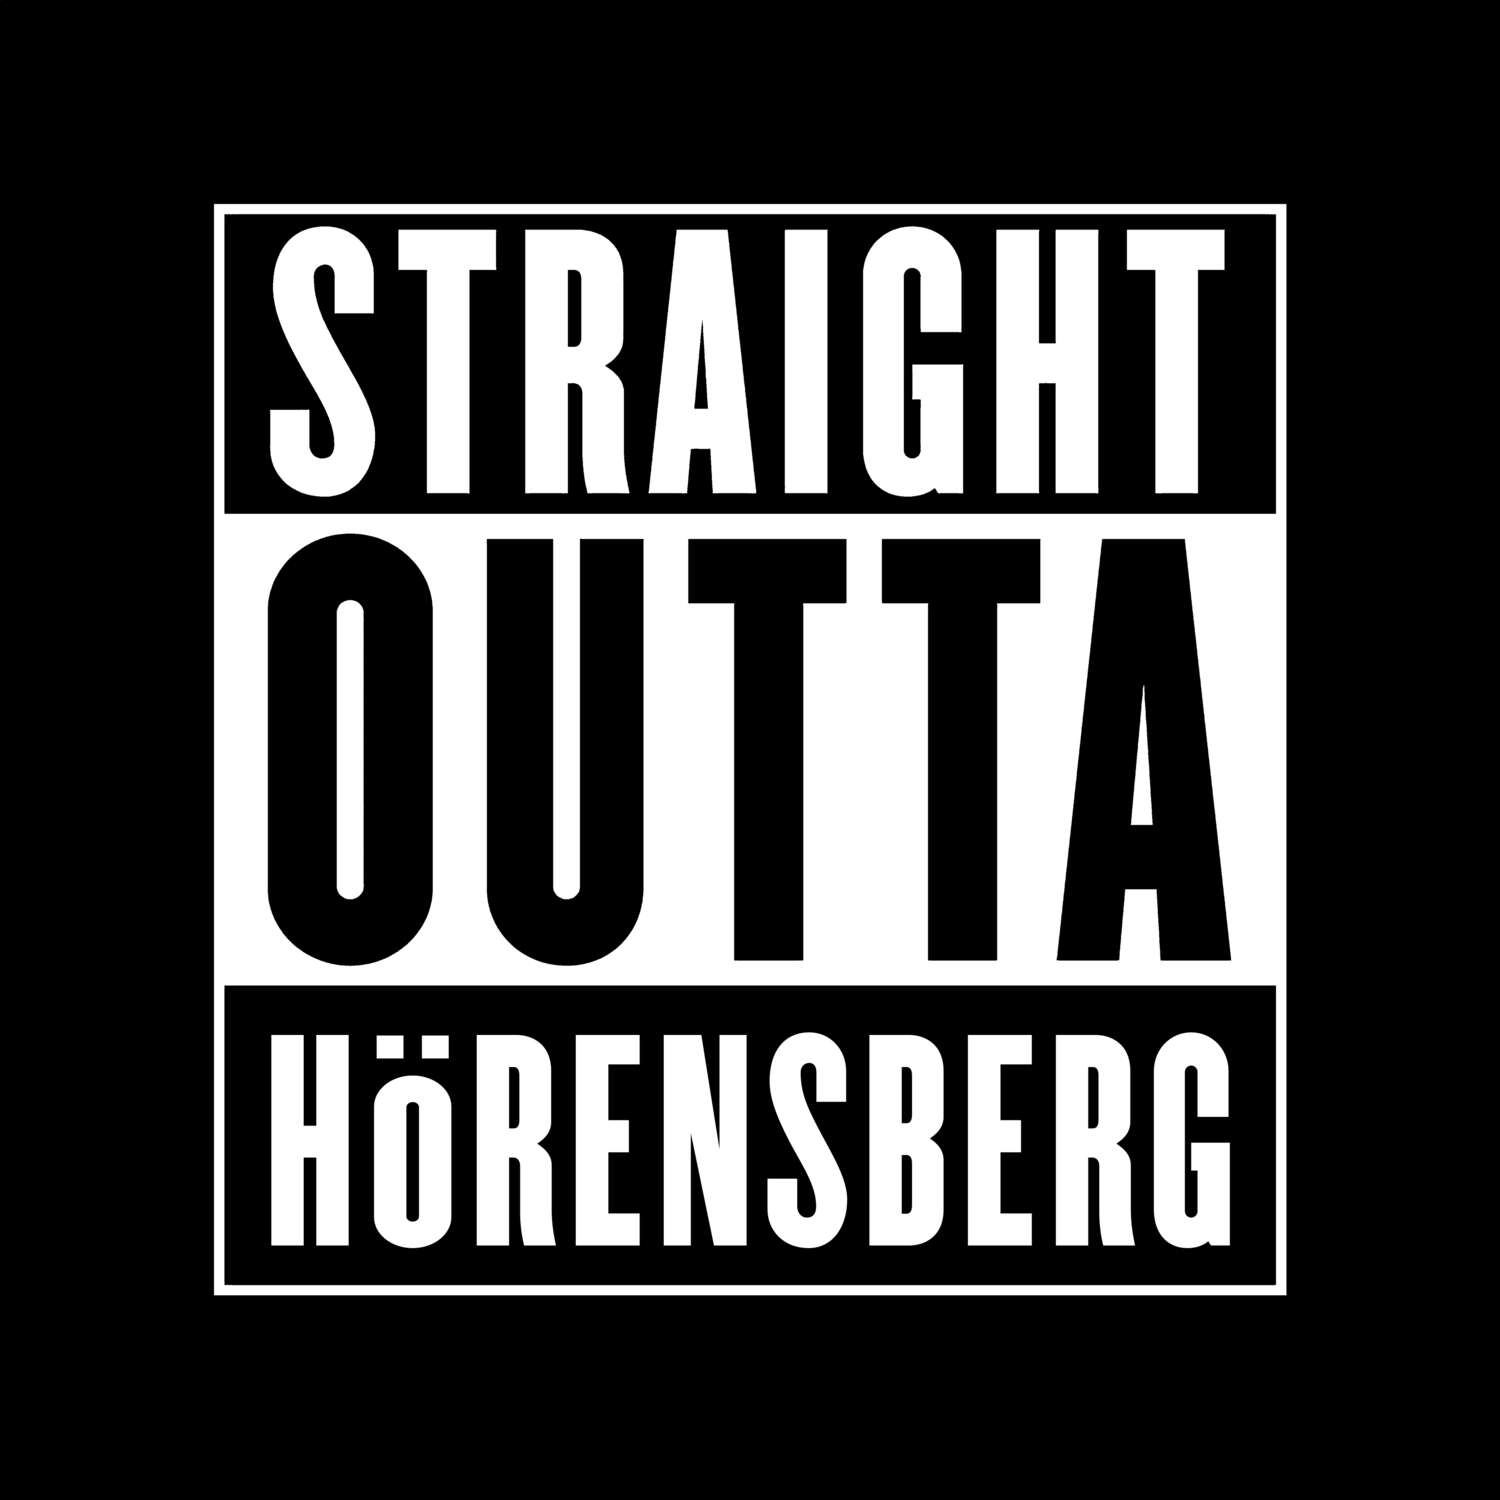 Hörensberg T-Shirt »Straight Outta«